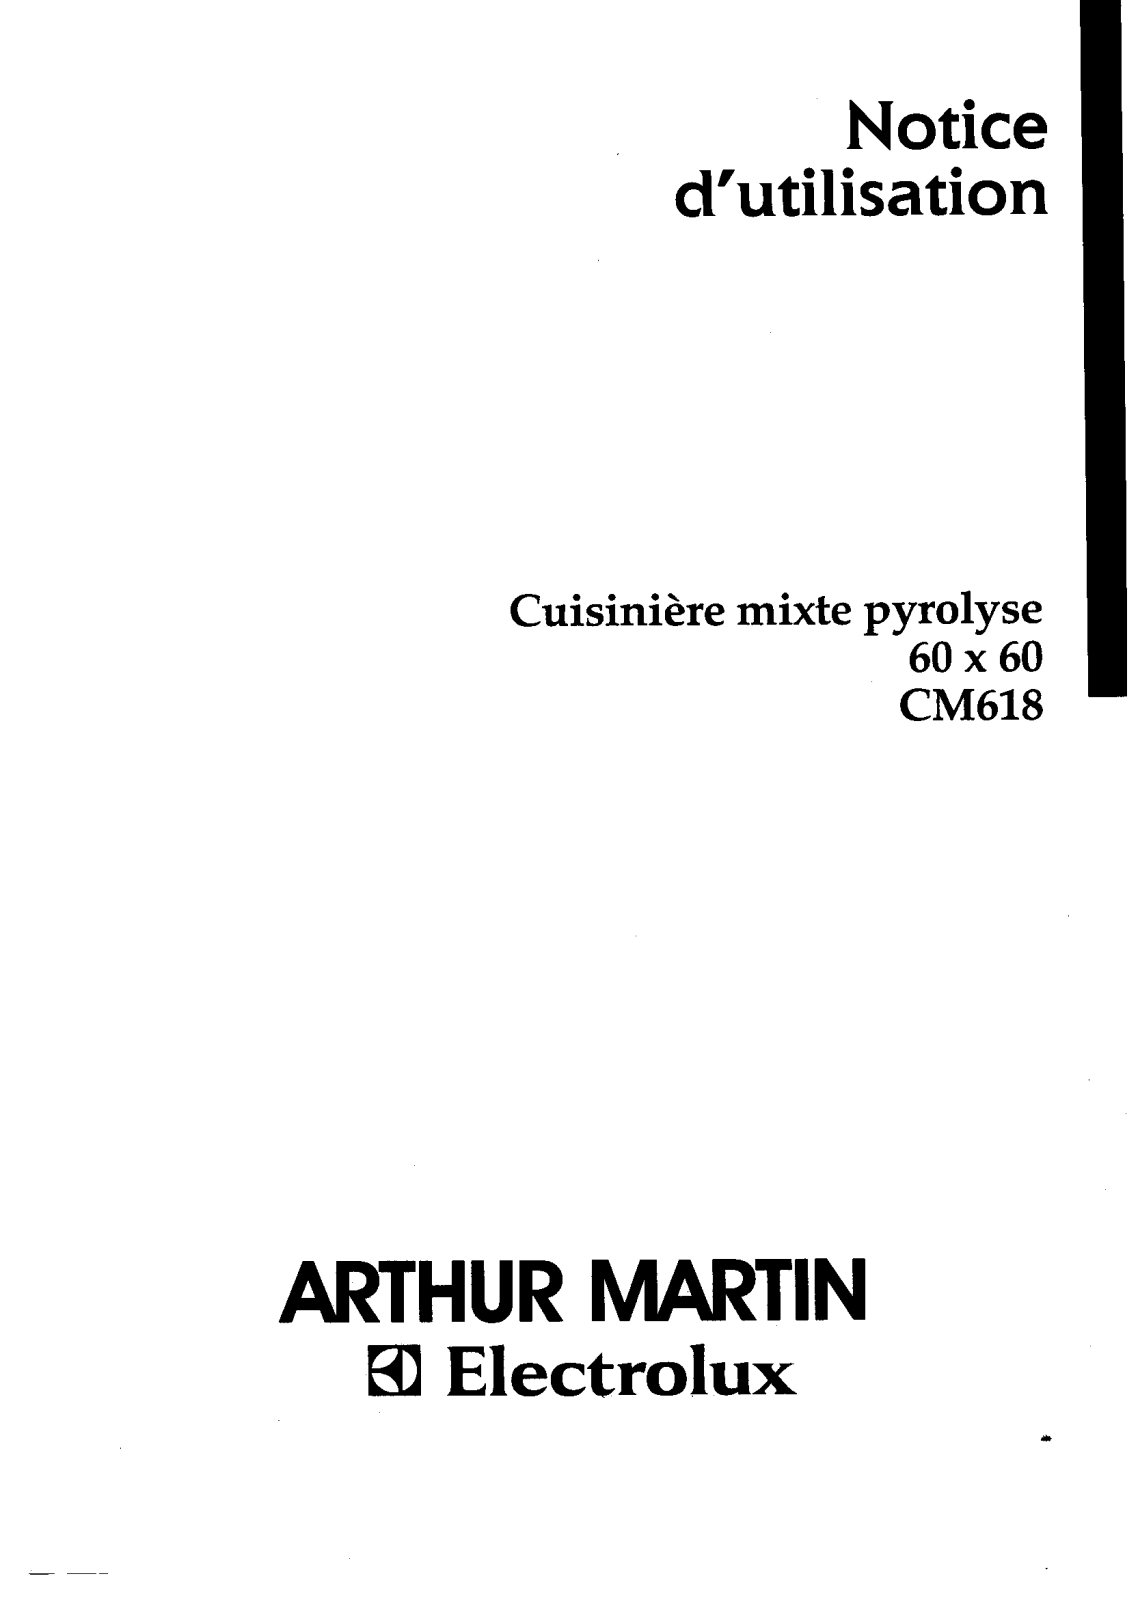 Arthur martin CM618 User Manual